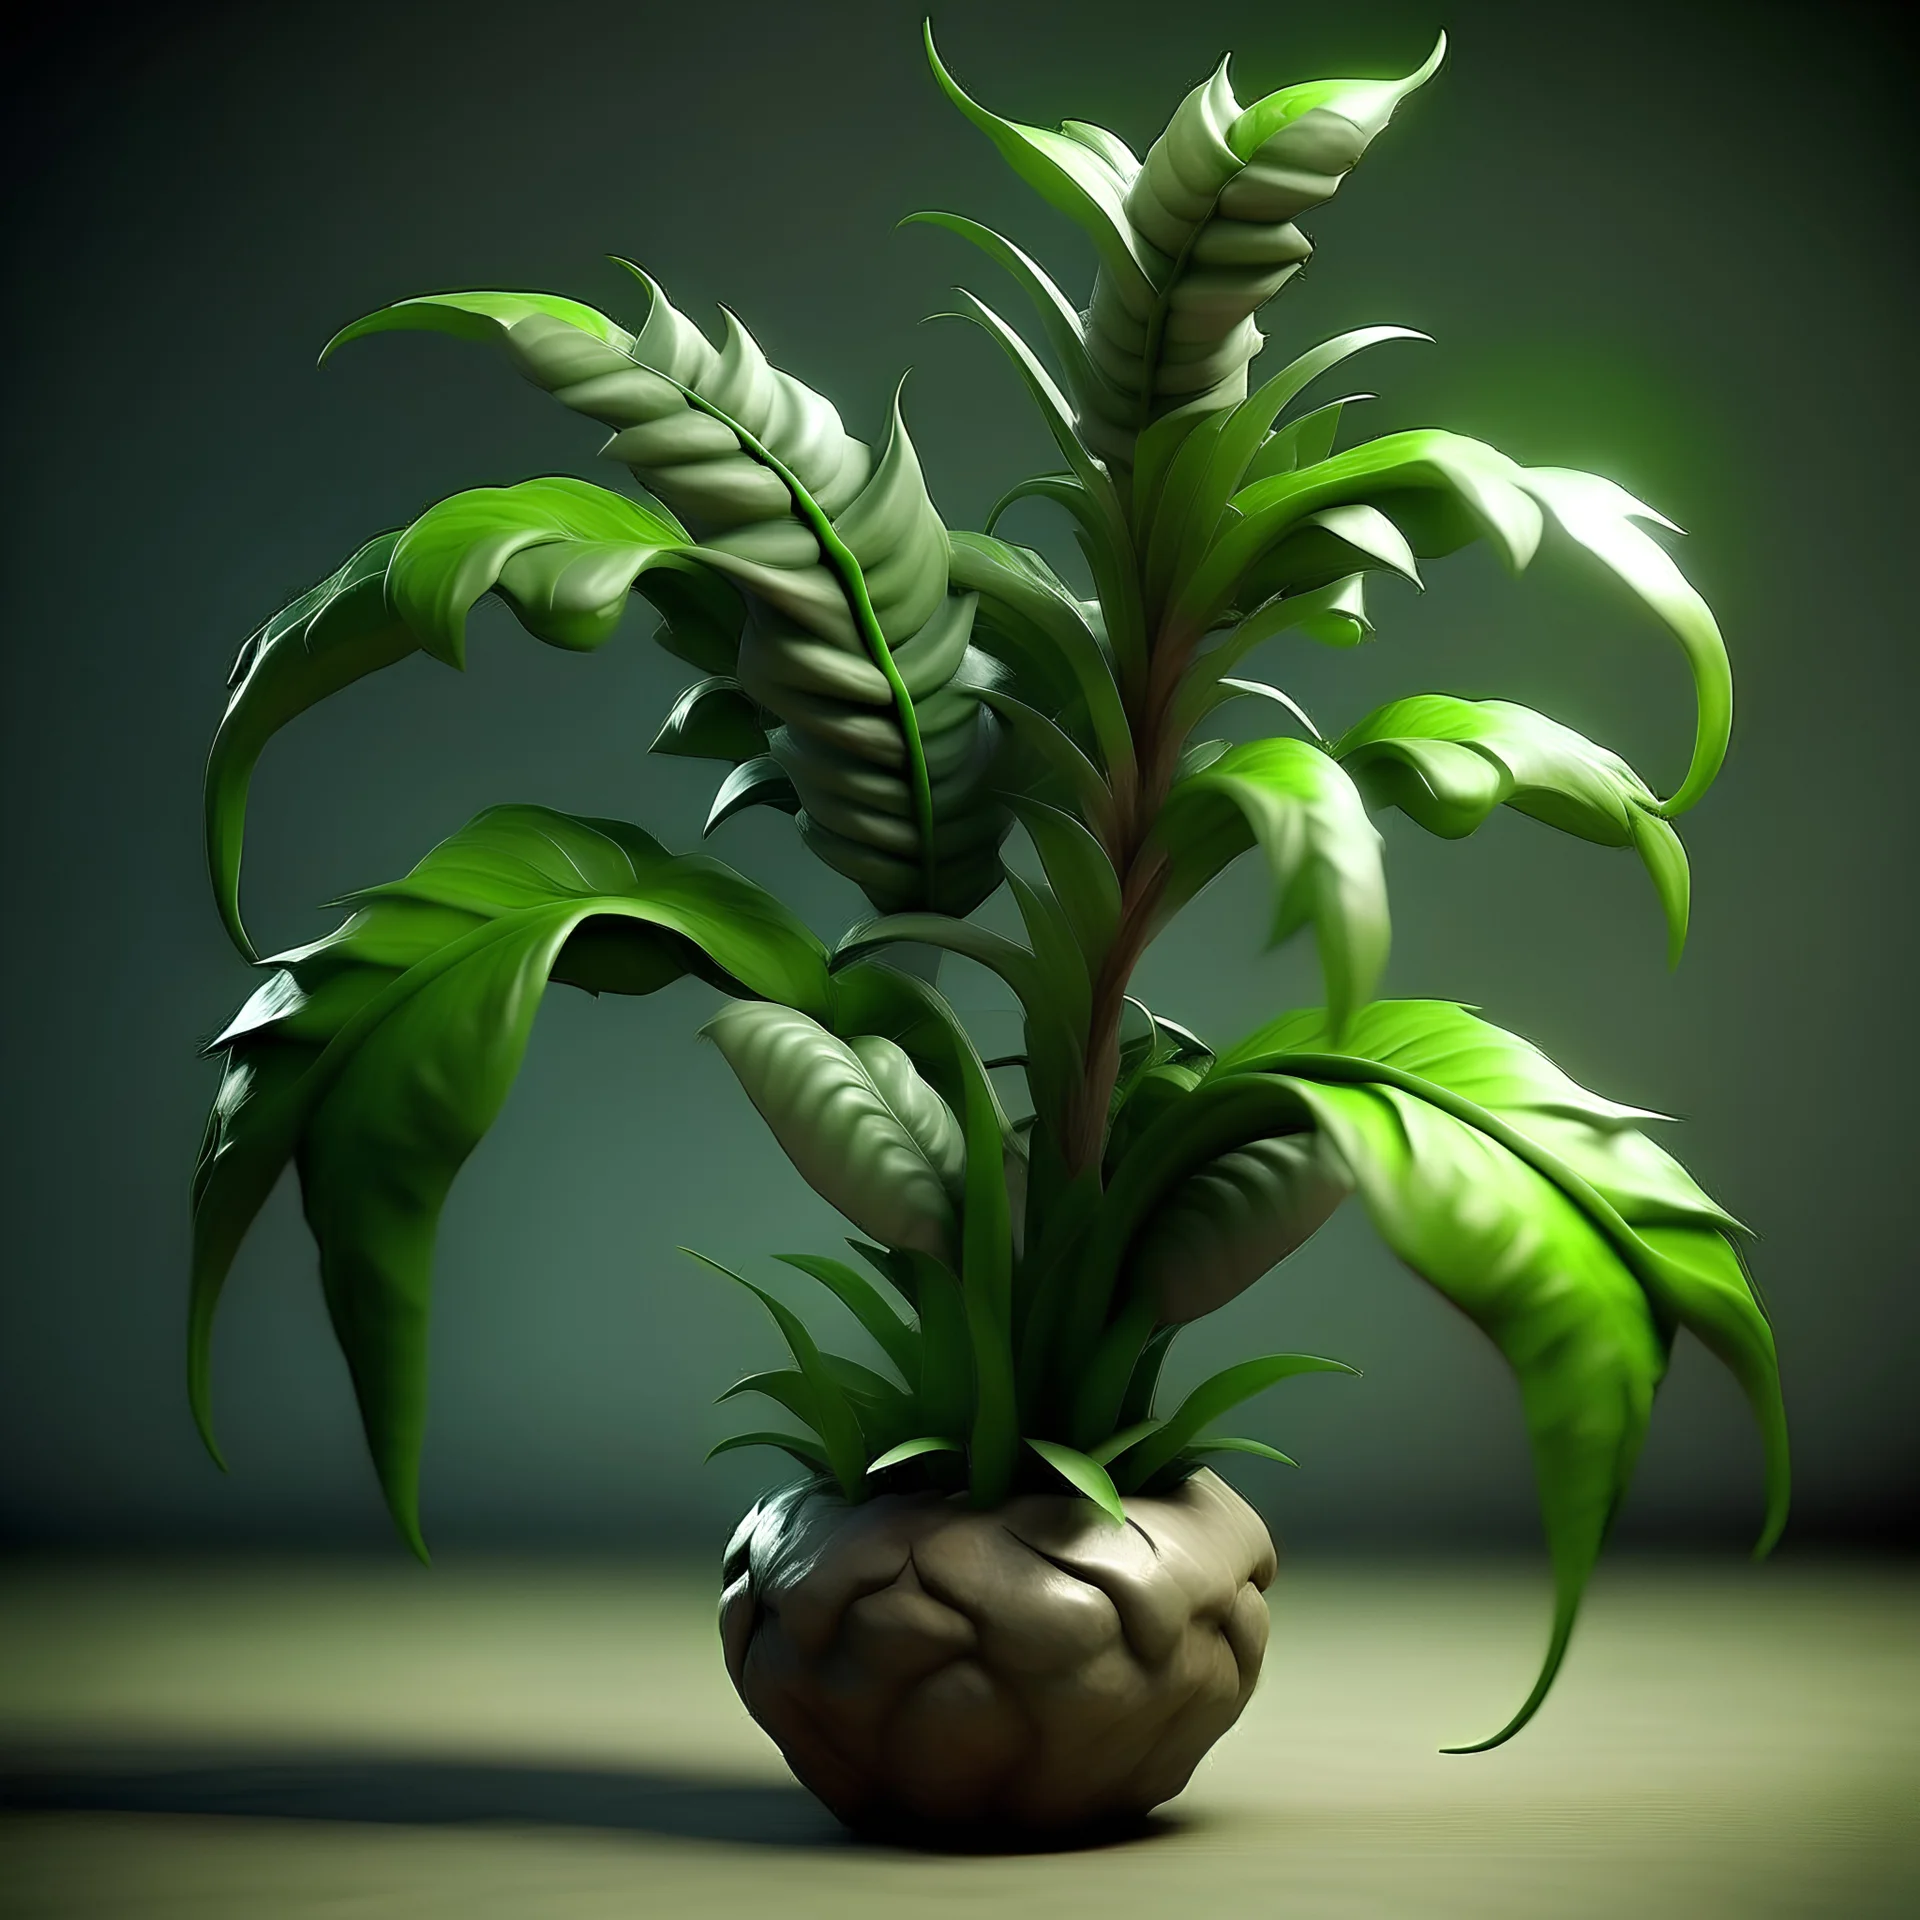 Realistic fantasy plant